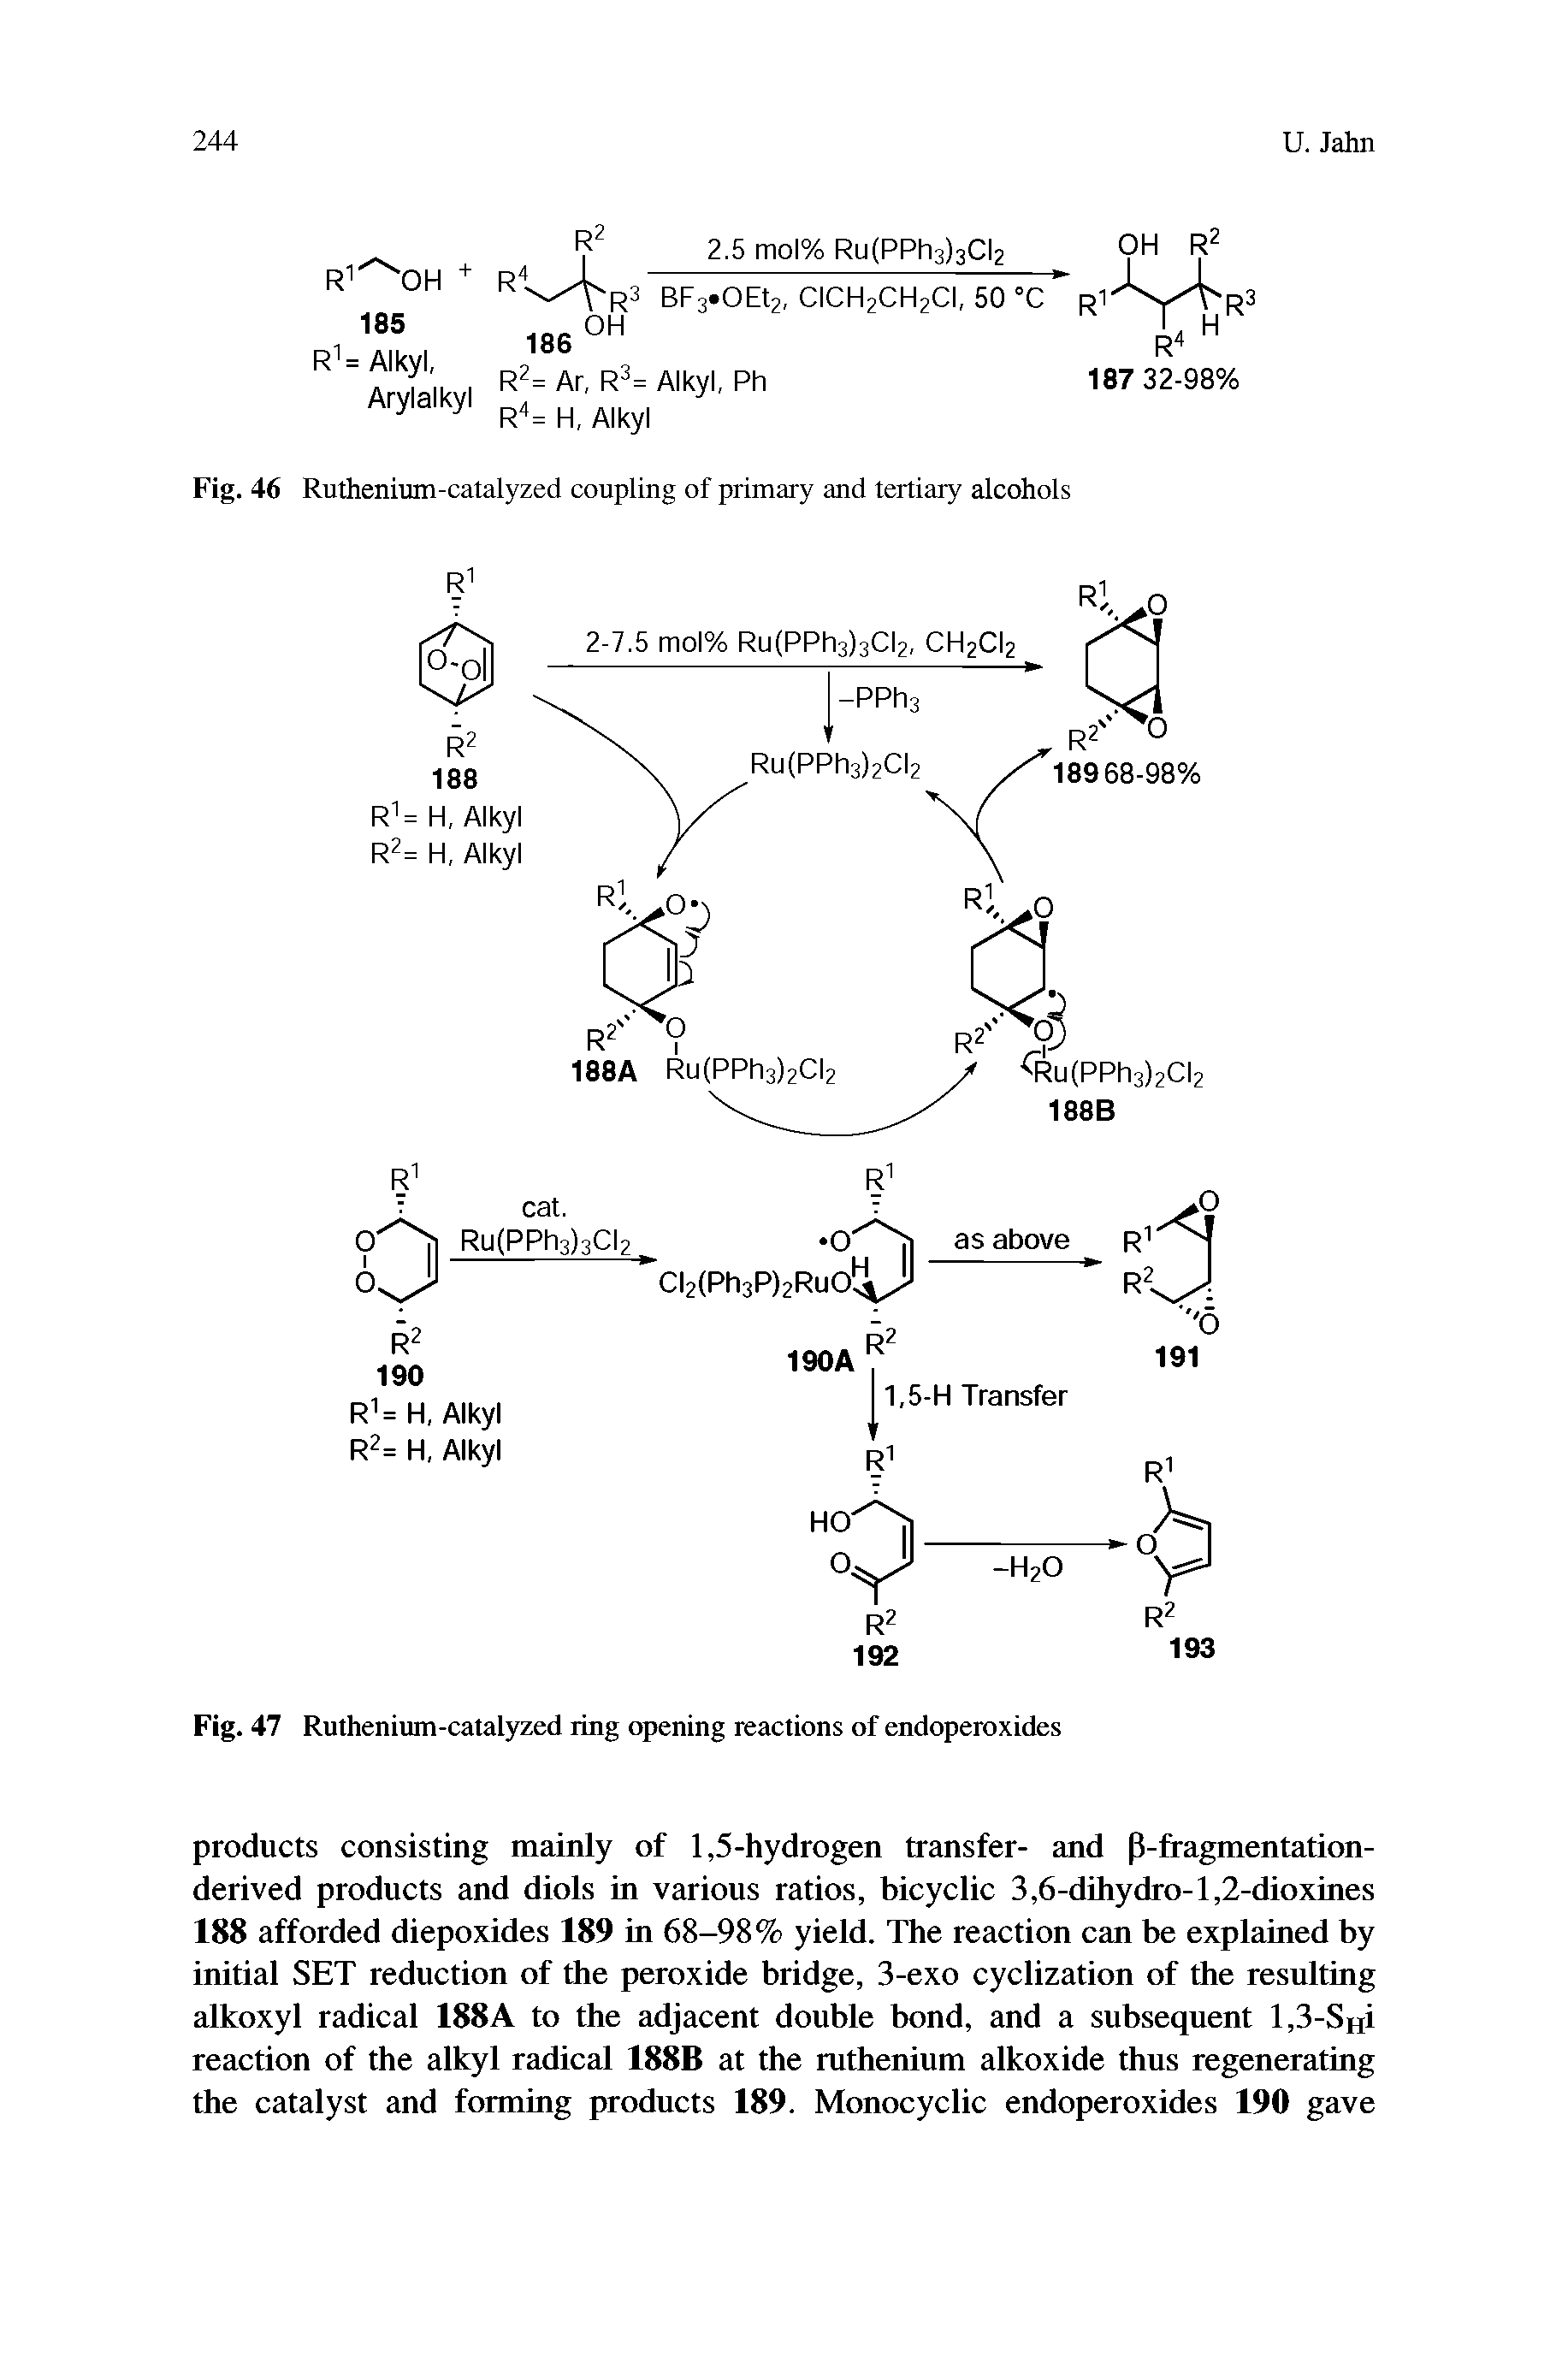 Fig. 47 Ruthenium-catalyzed ring opening reactions of endoperoxides...